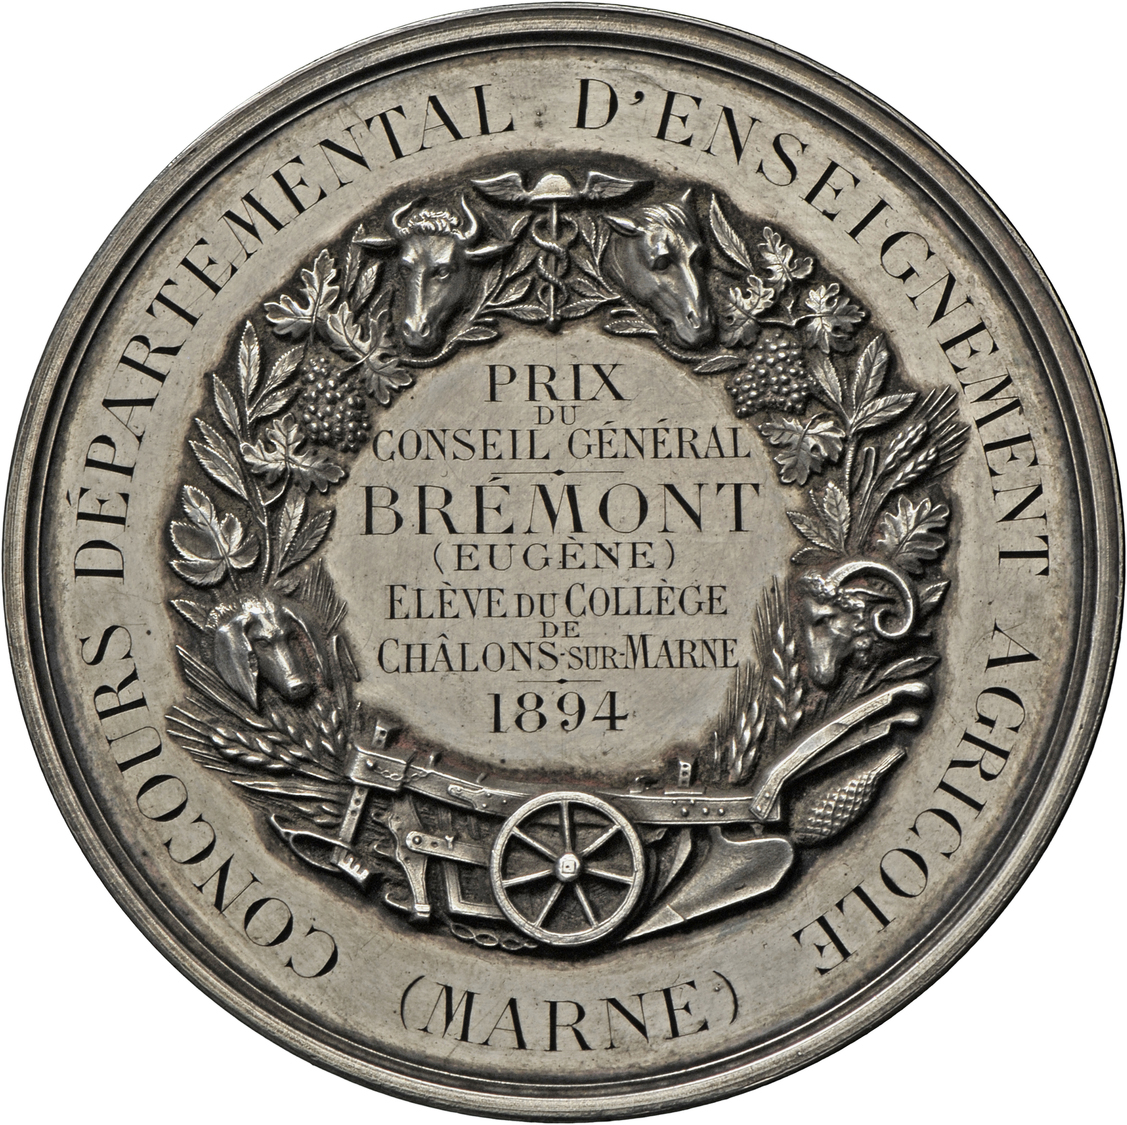 05451 Medaillen Alle Welt: Frankreich, Marne Département: Silbermedaille 1870, Stempel Von Oudine, Gravur 1894, Preismed - Non Classés